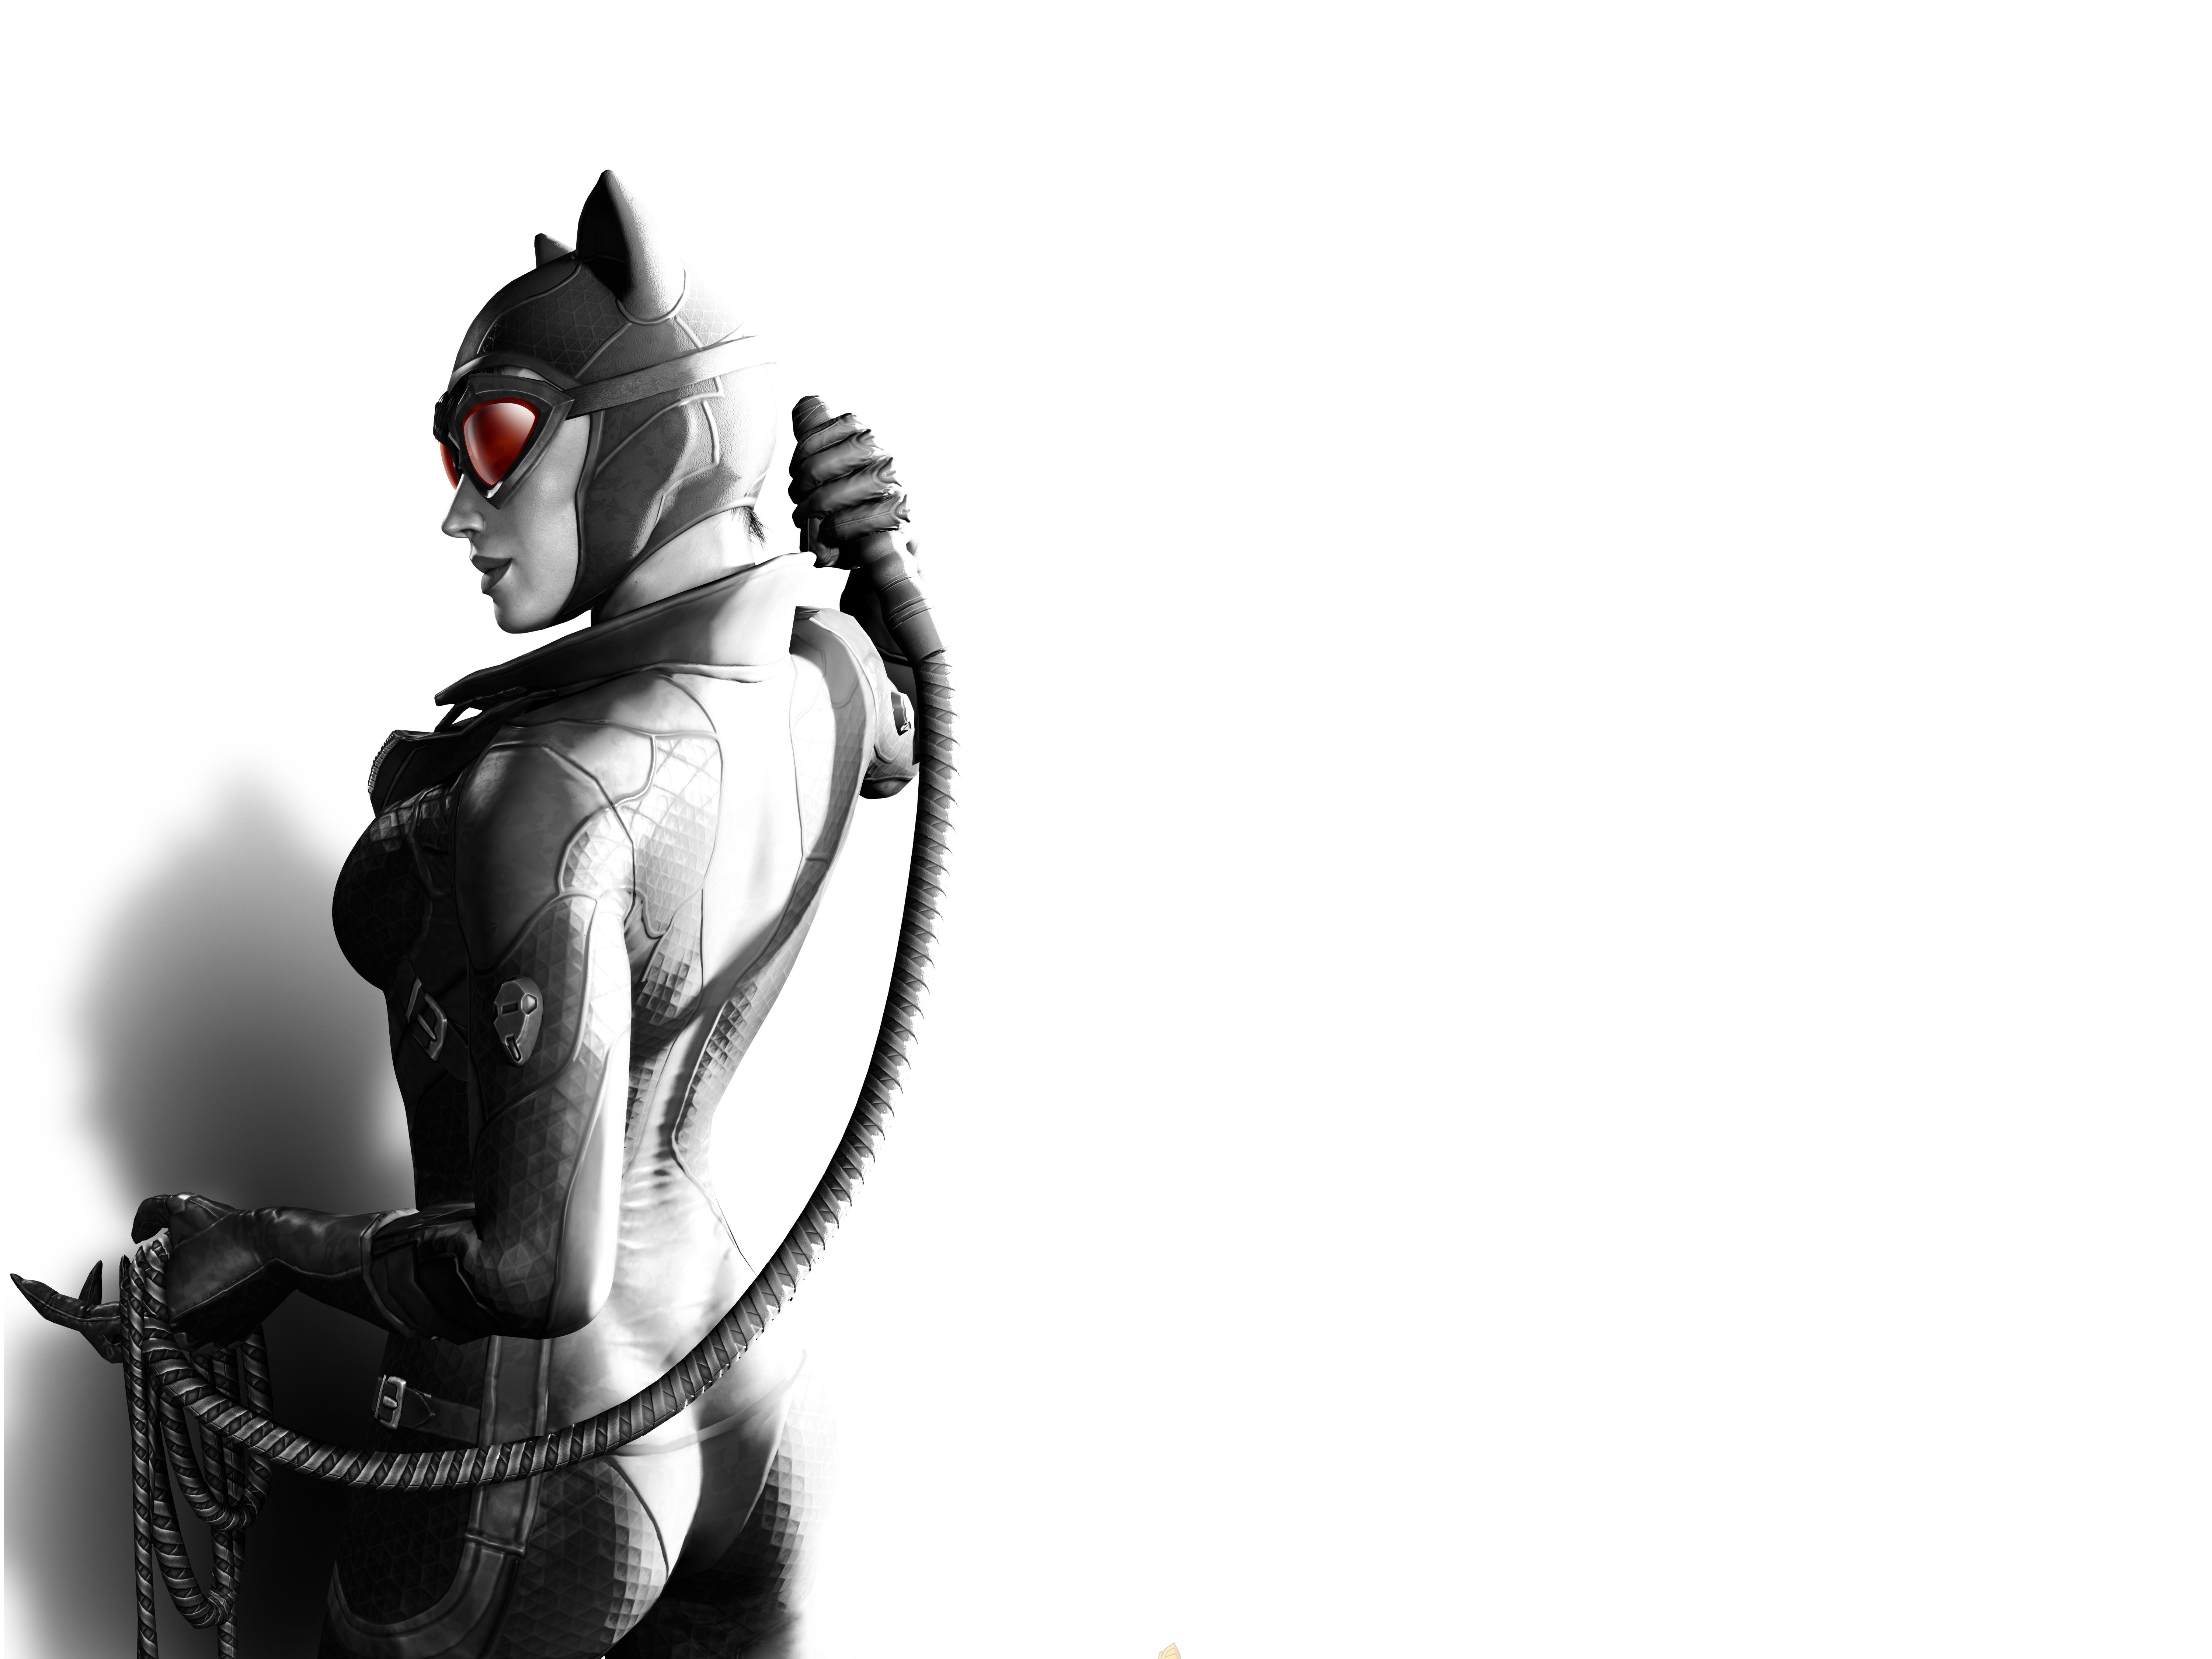 Скачать обои бесплатно Видеоигры, Бэтмен, Женщина Кошка, Batman: Аркхем Сити картинка на рабочий стол ПК